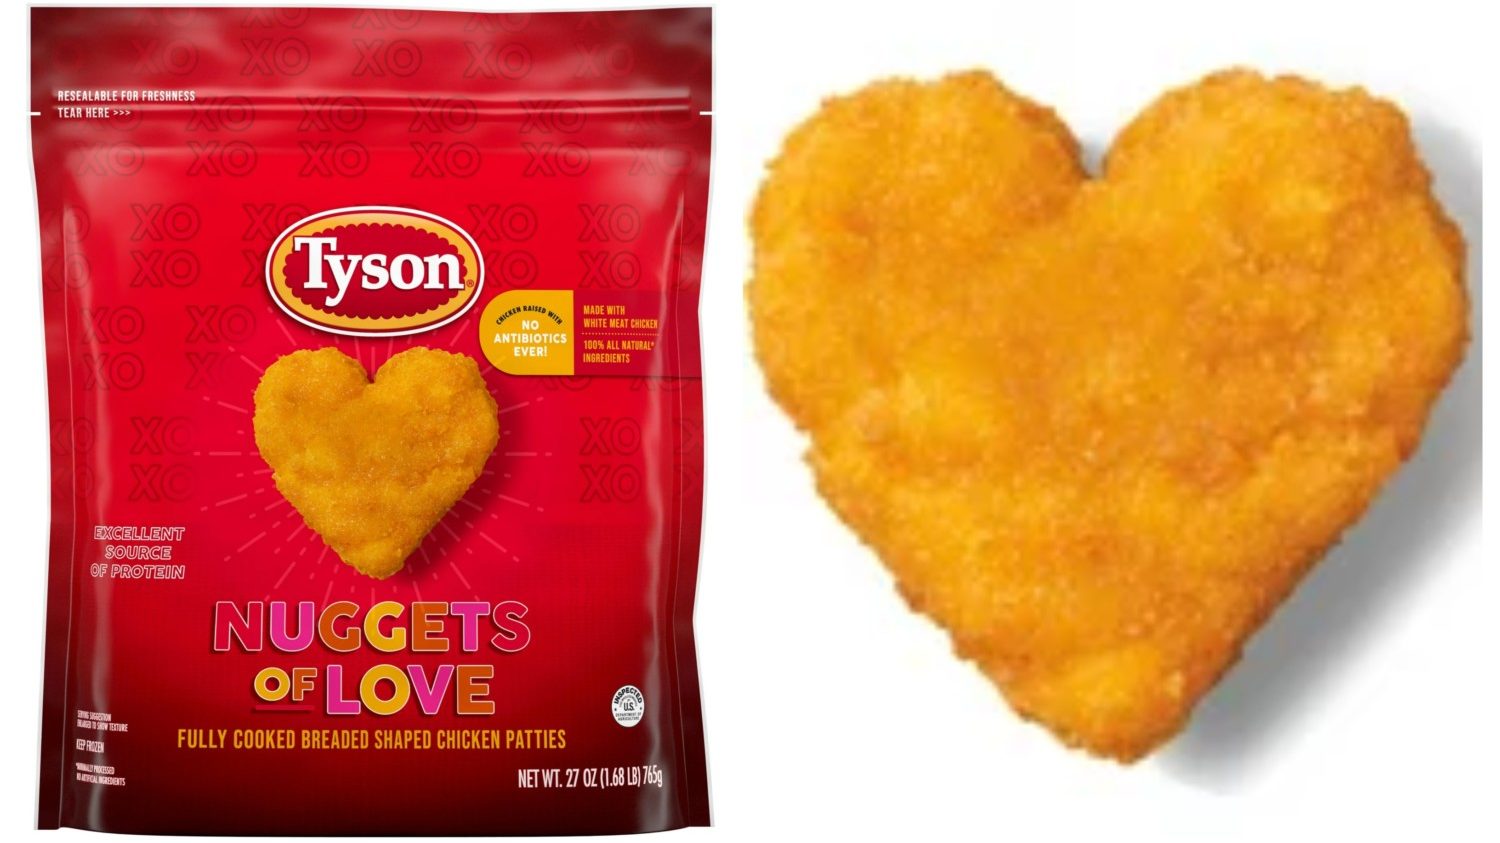 Tyson's heart-shaped chicken nuggets